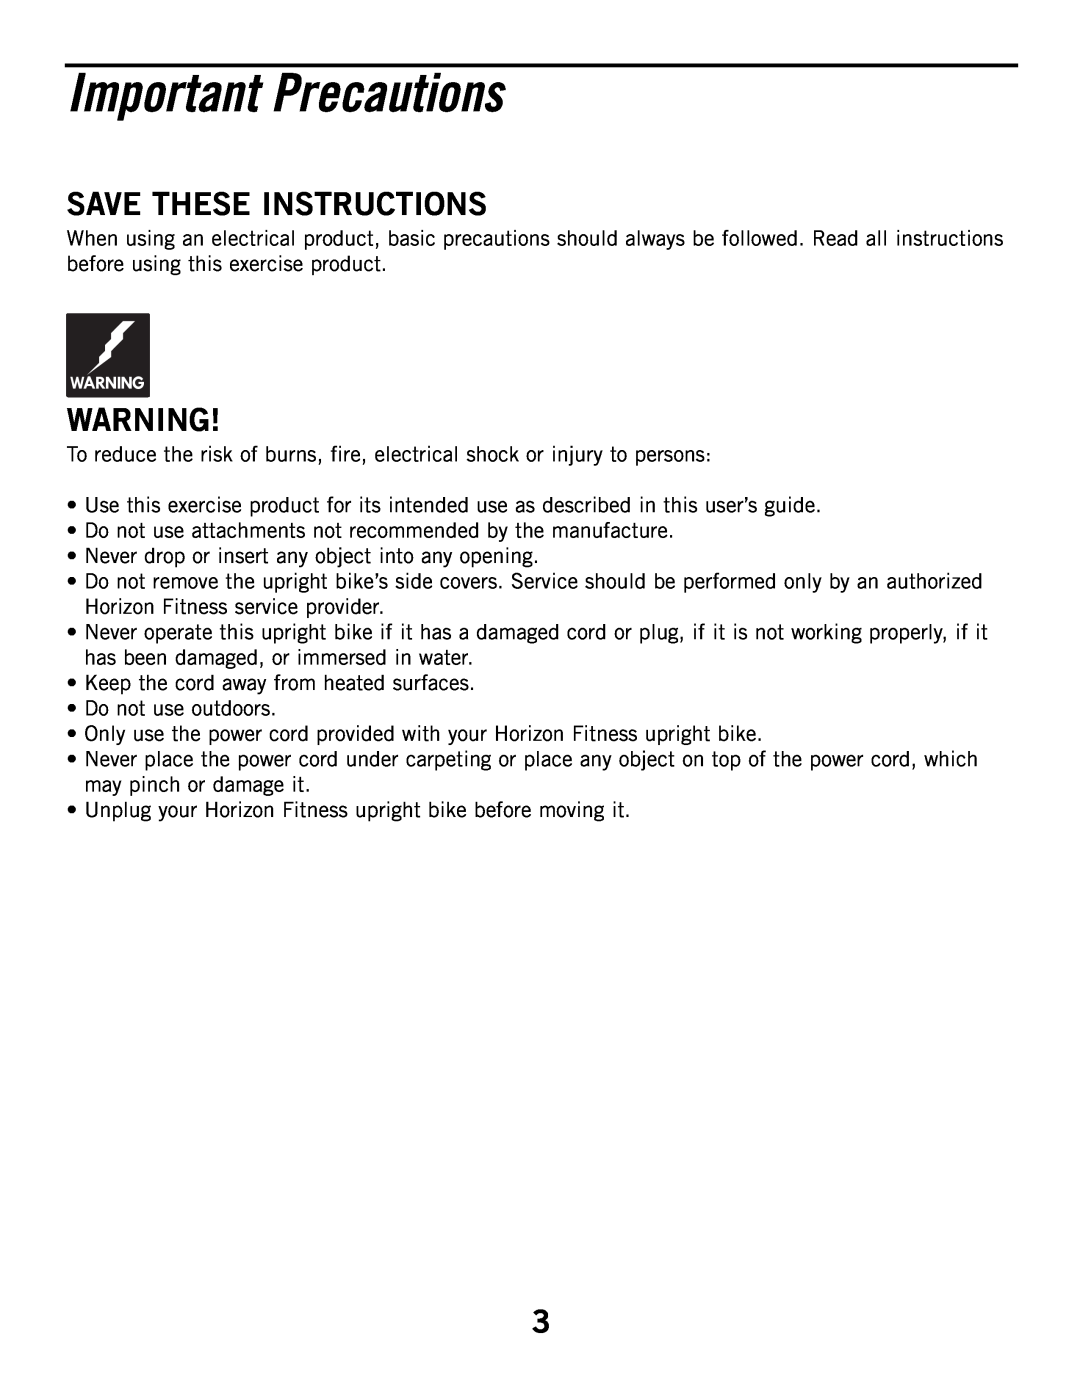 Horizon Fitness 2.1B, 3.1B manual Important Precautions, Save These Instructions 